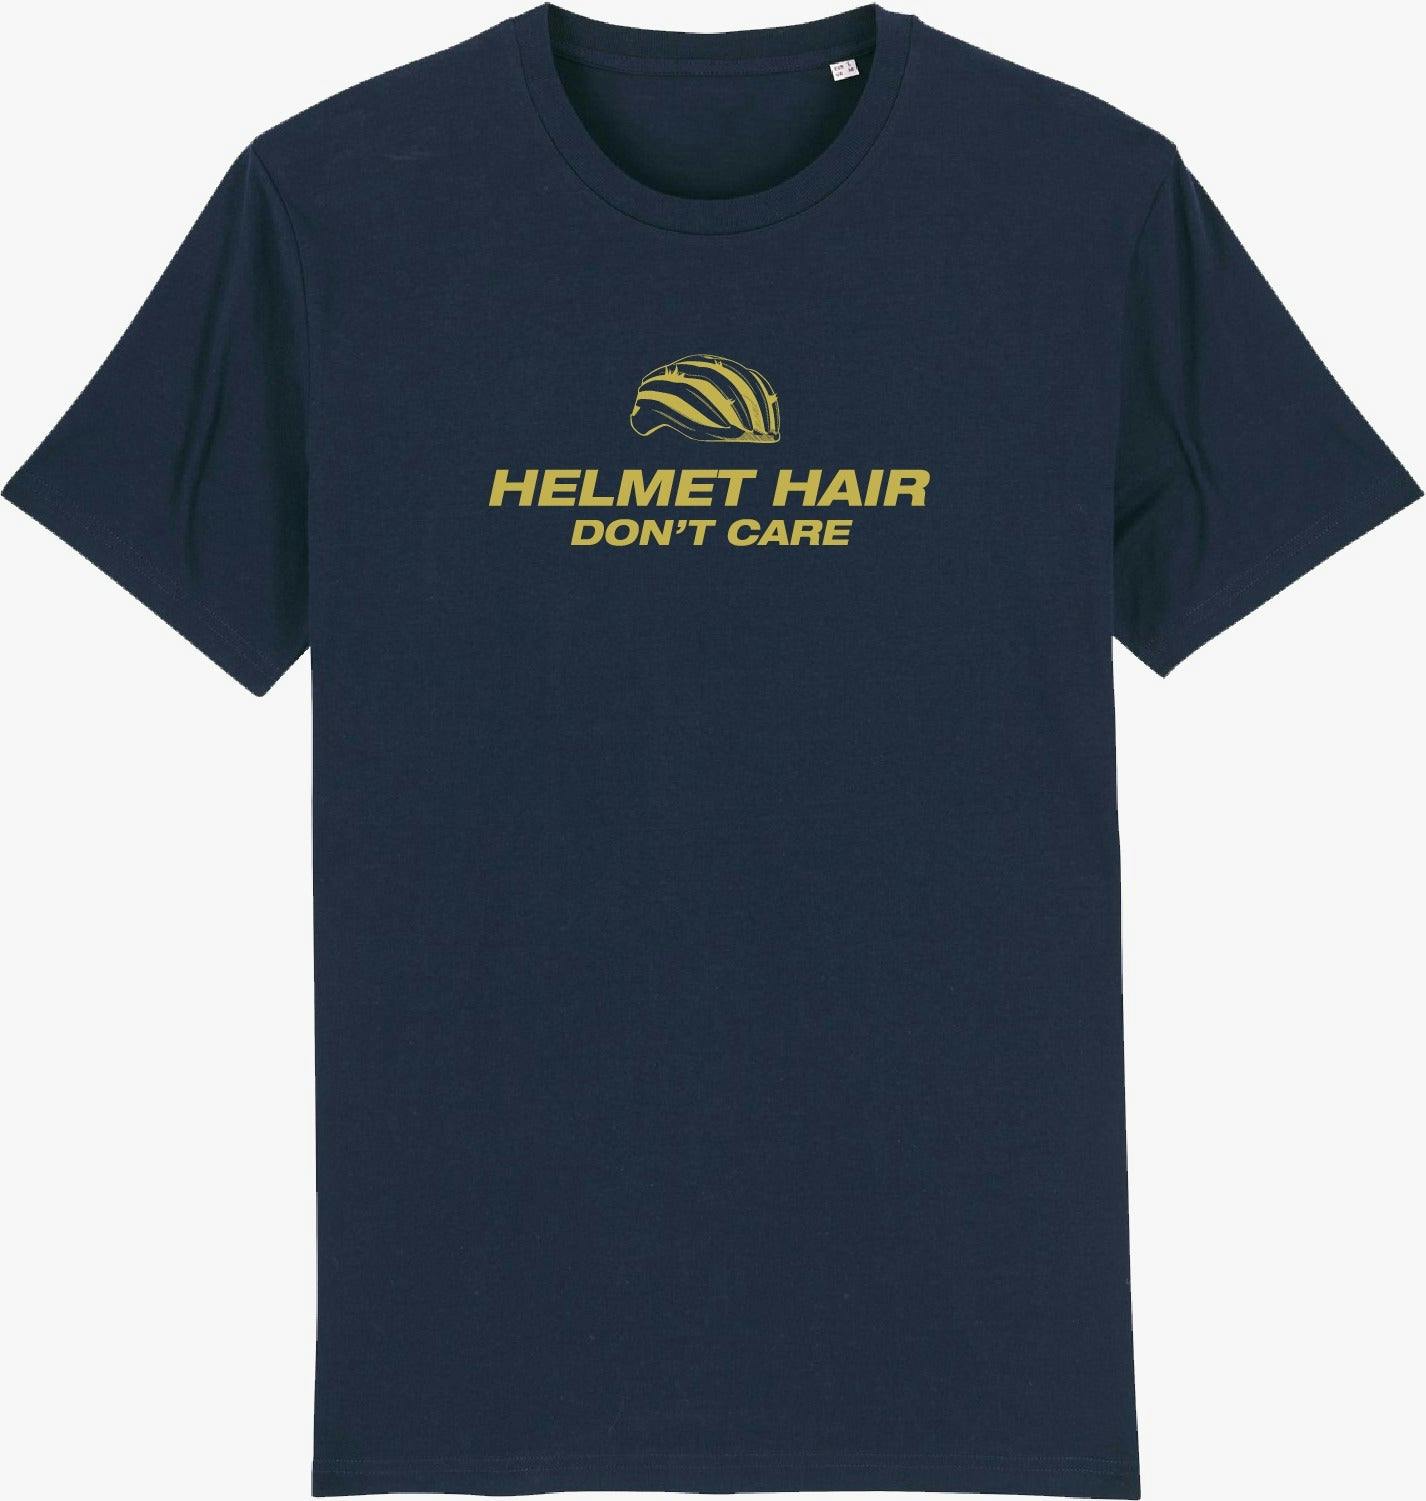 Helmet hair don't care unisex cycling T-shirt (navy - mustard)